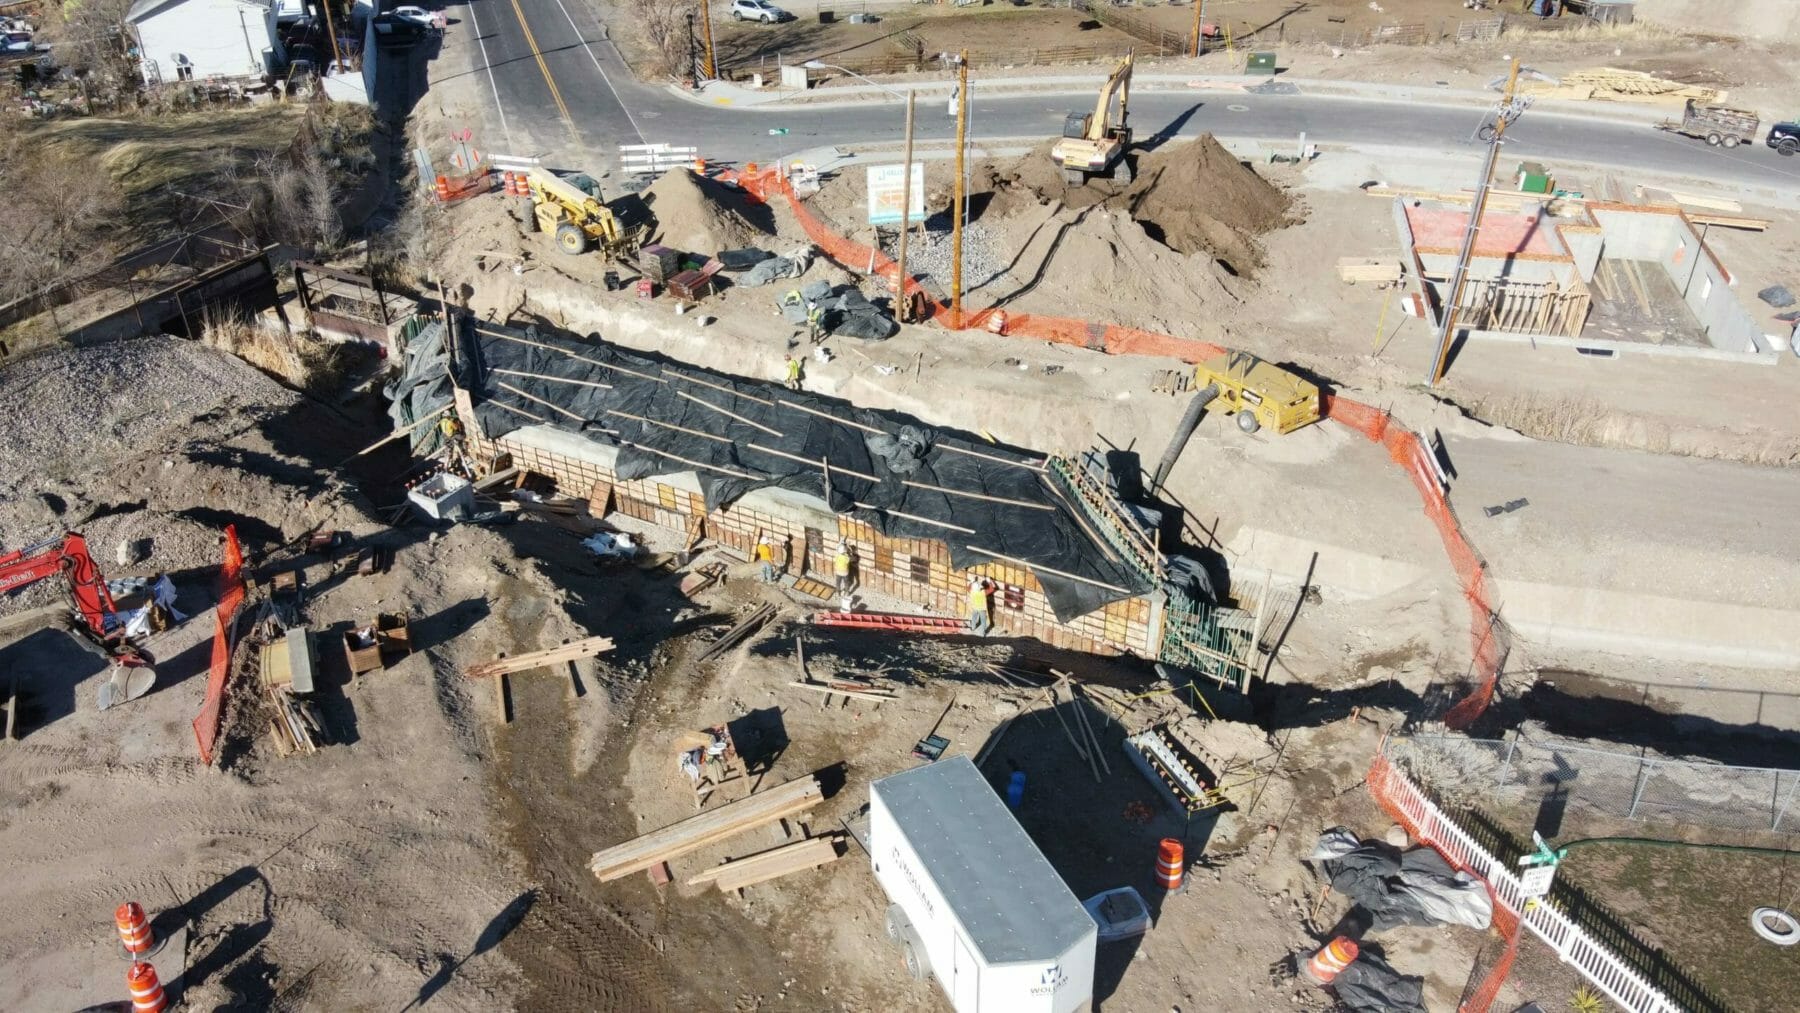 concrete construction for Magna bridge replacement in Utah | Wollam Construction